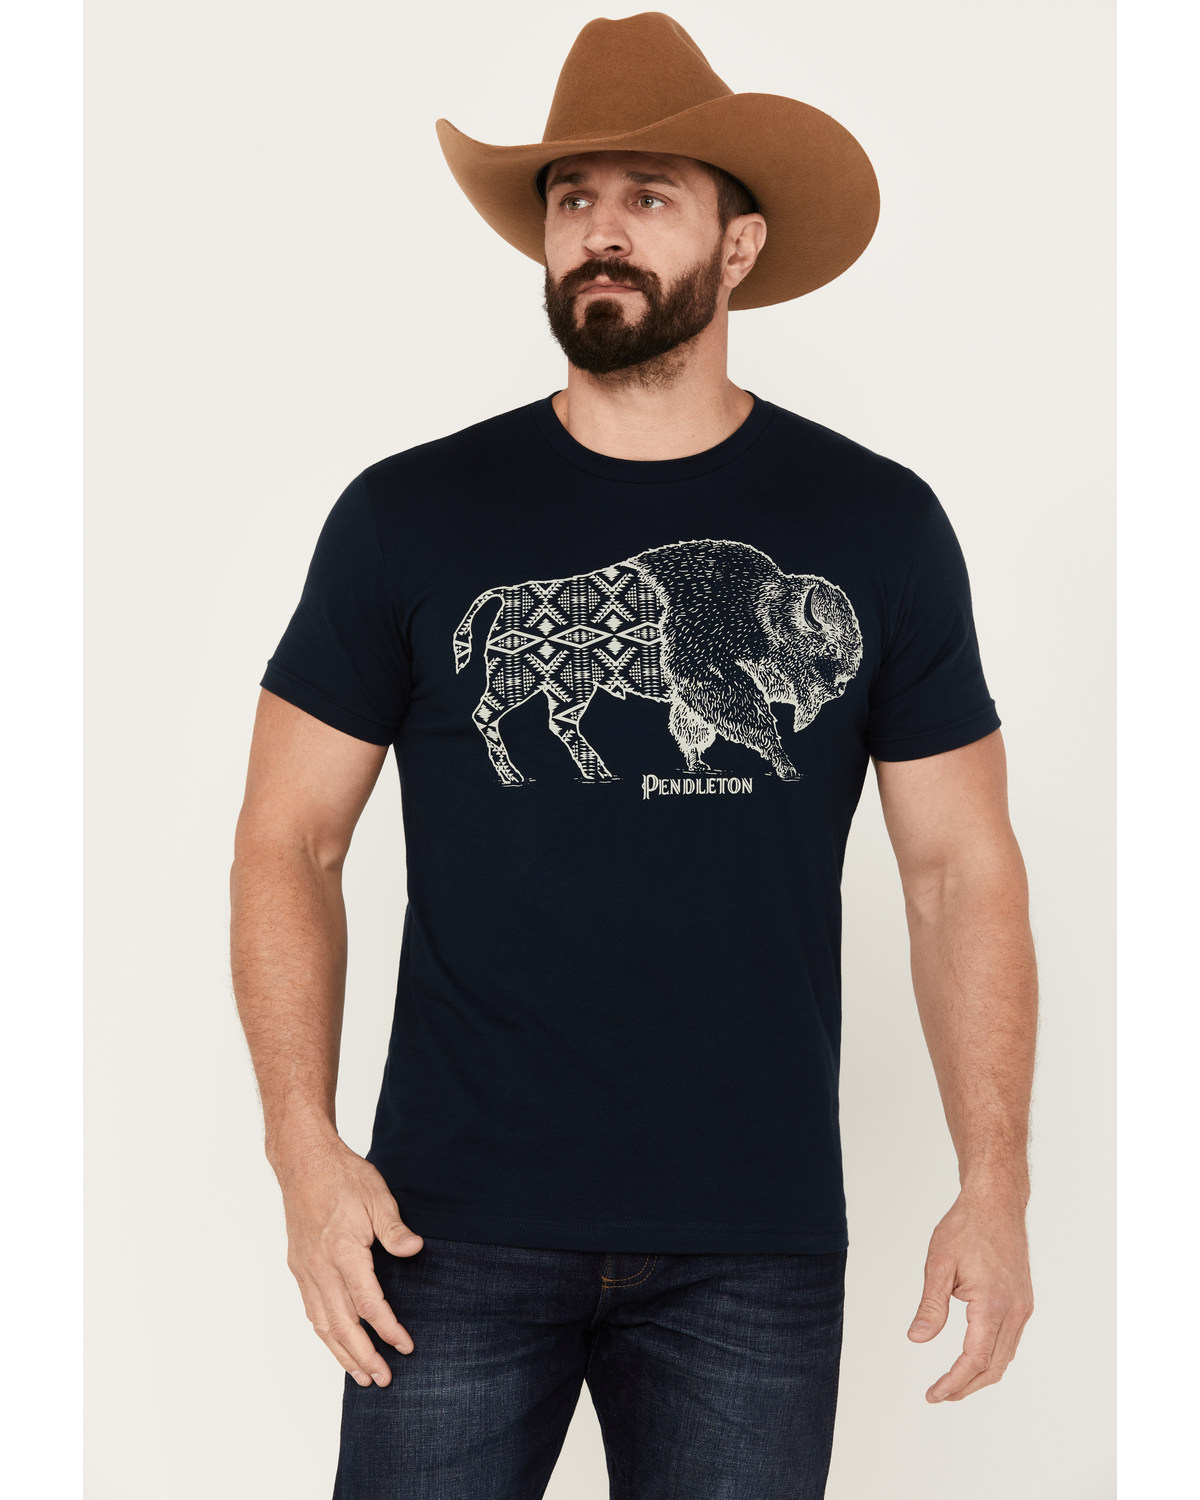 Pendleton Men's Jacquard Bison Short Sleeve Graphic T-Shirt